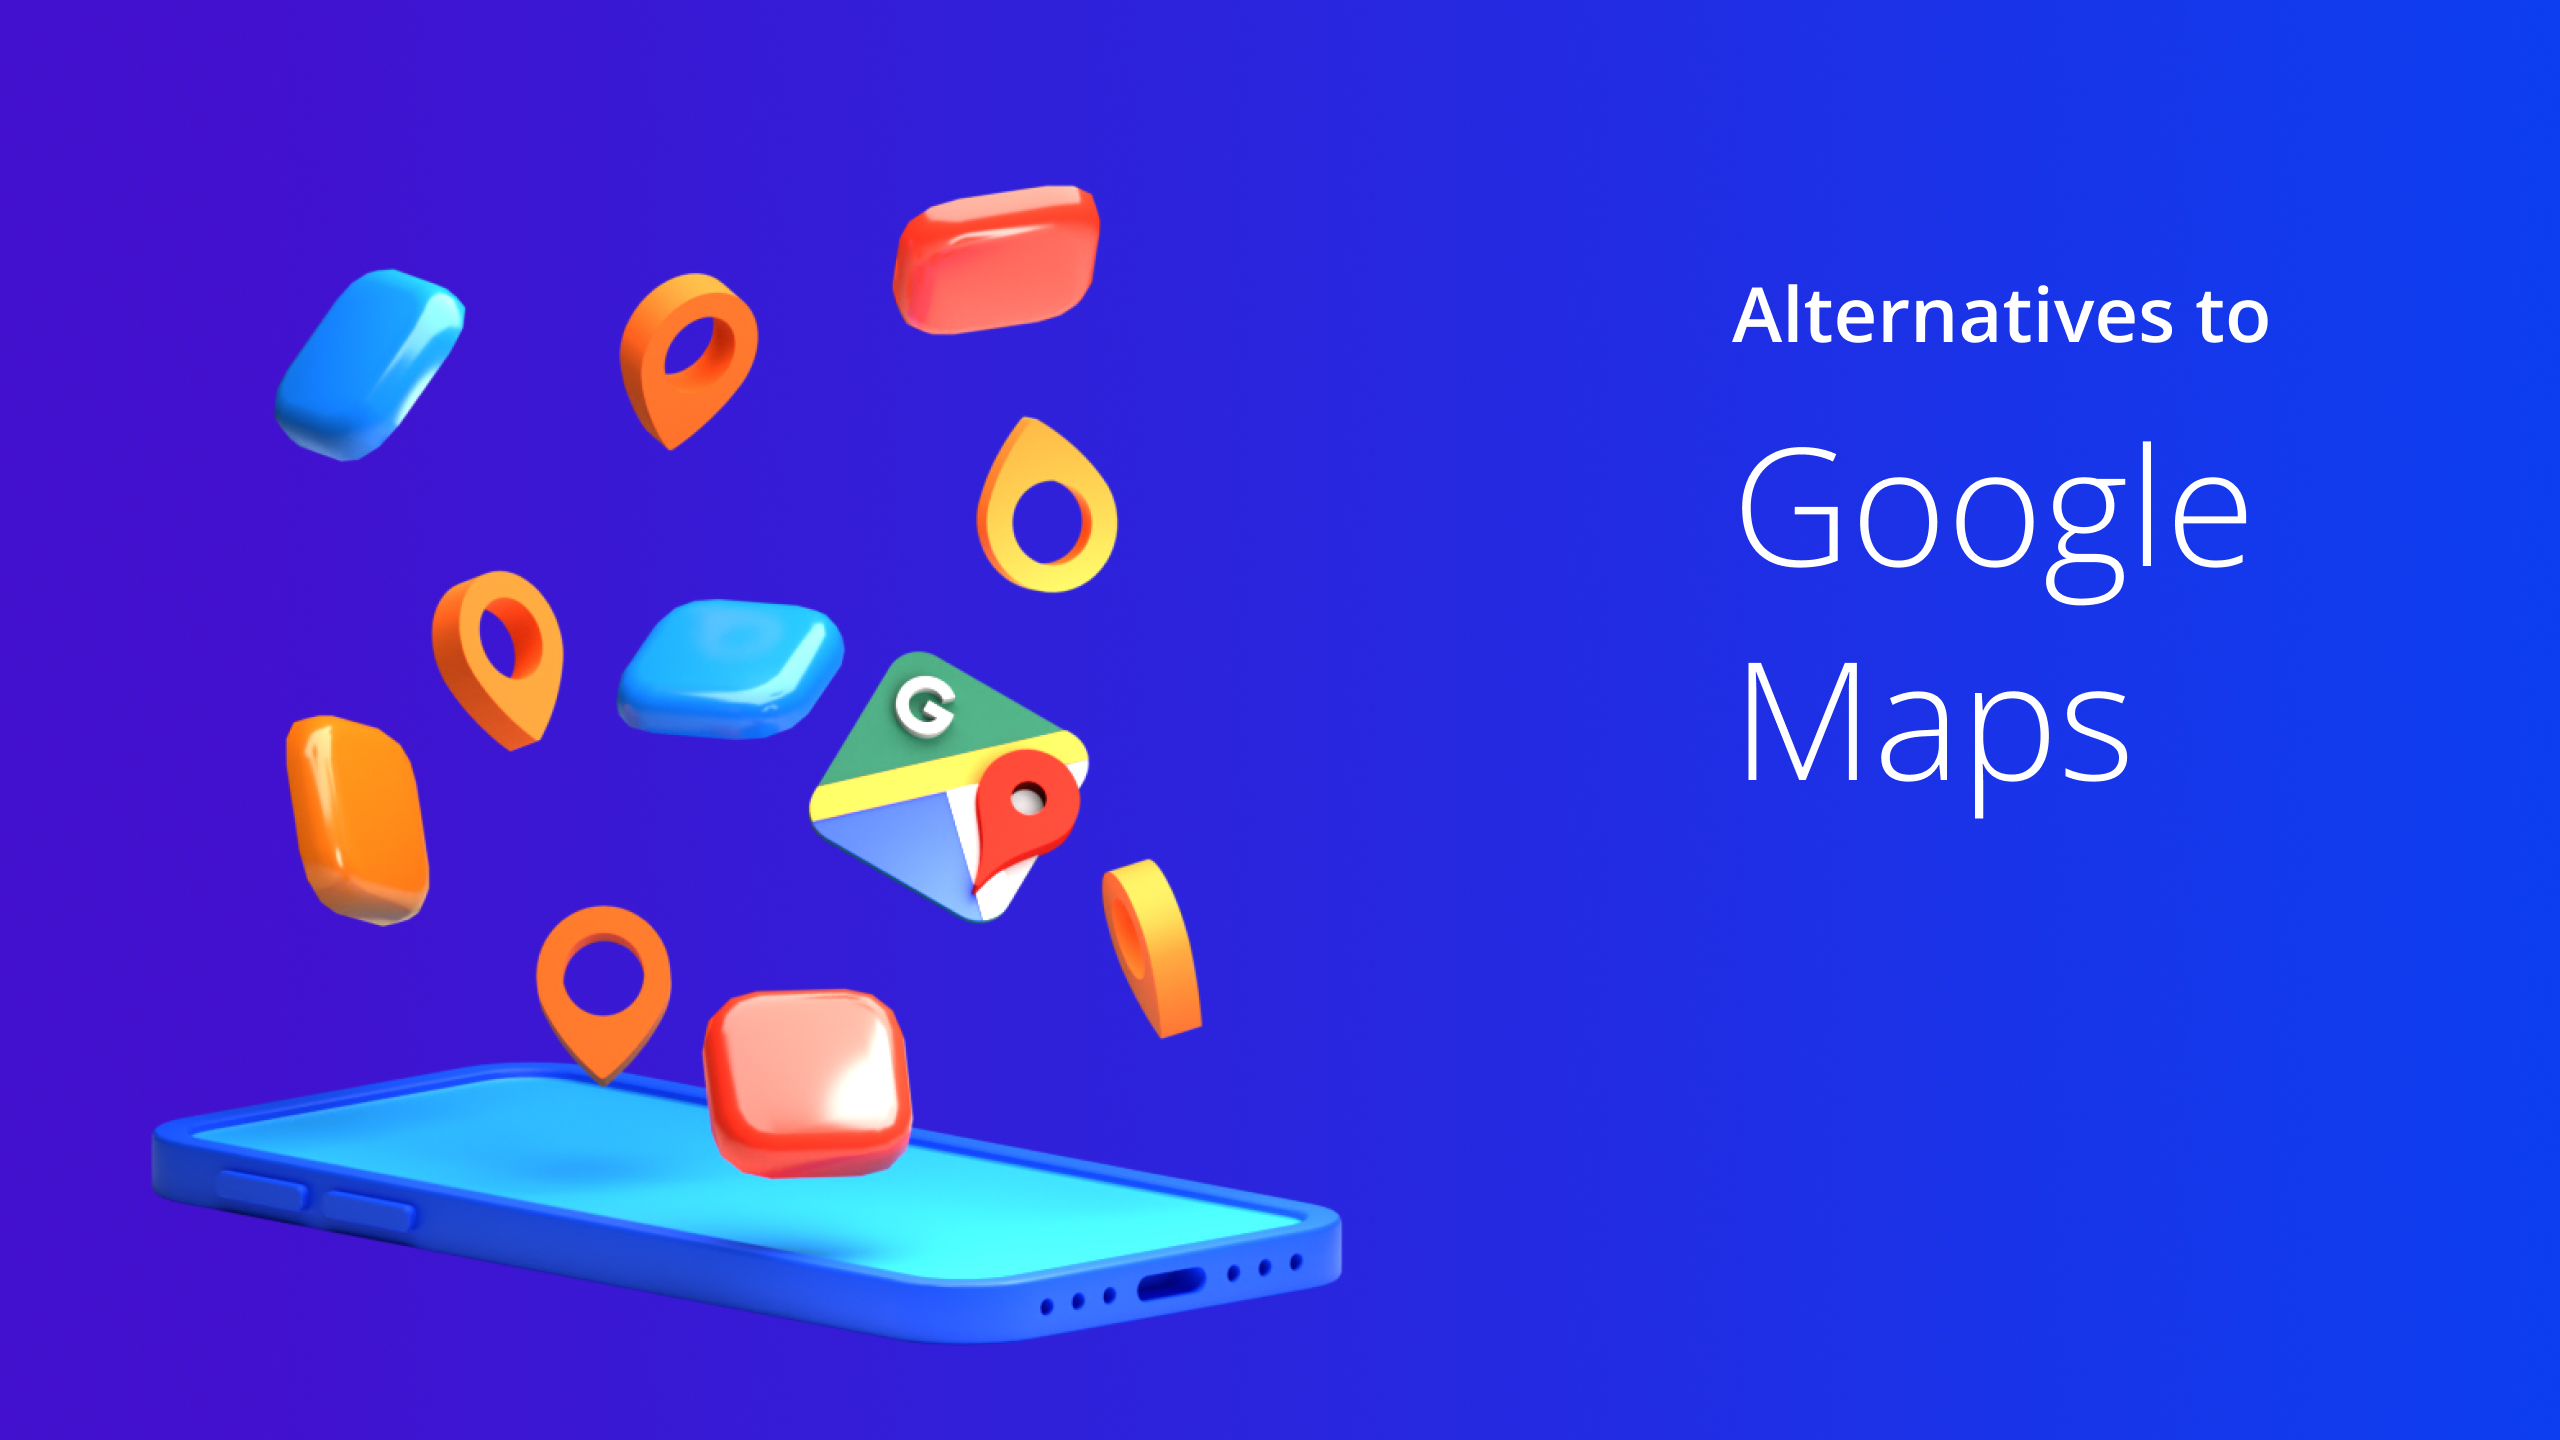 Custom Image - Alternatives to Google Maps